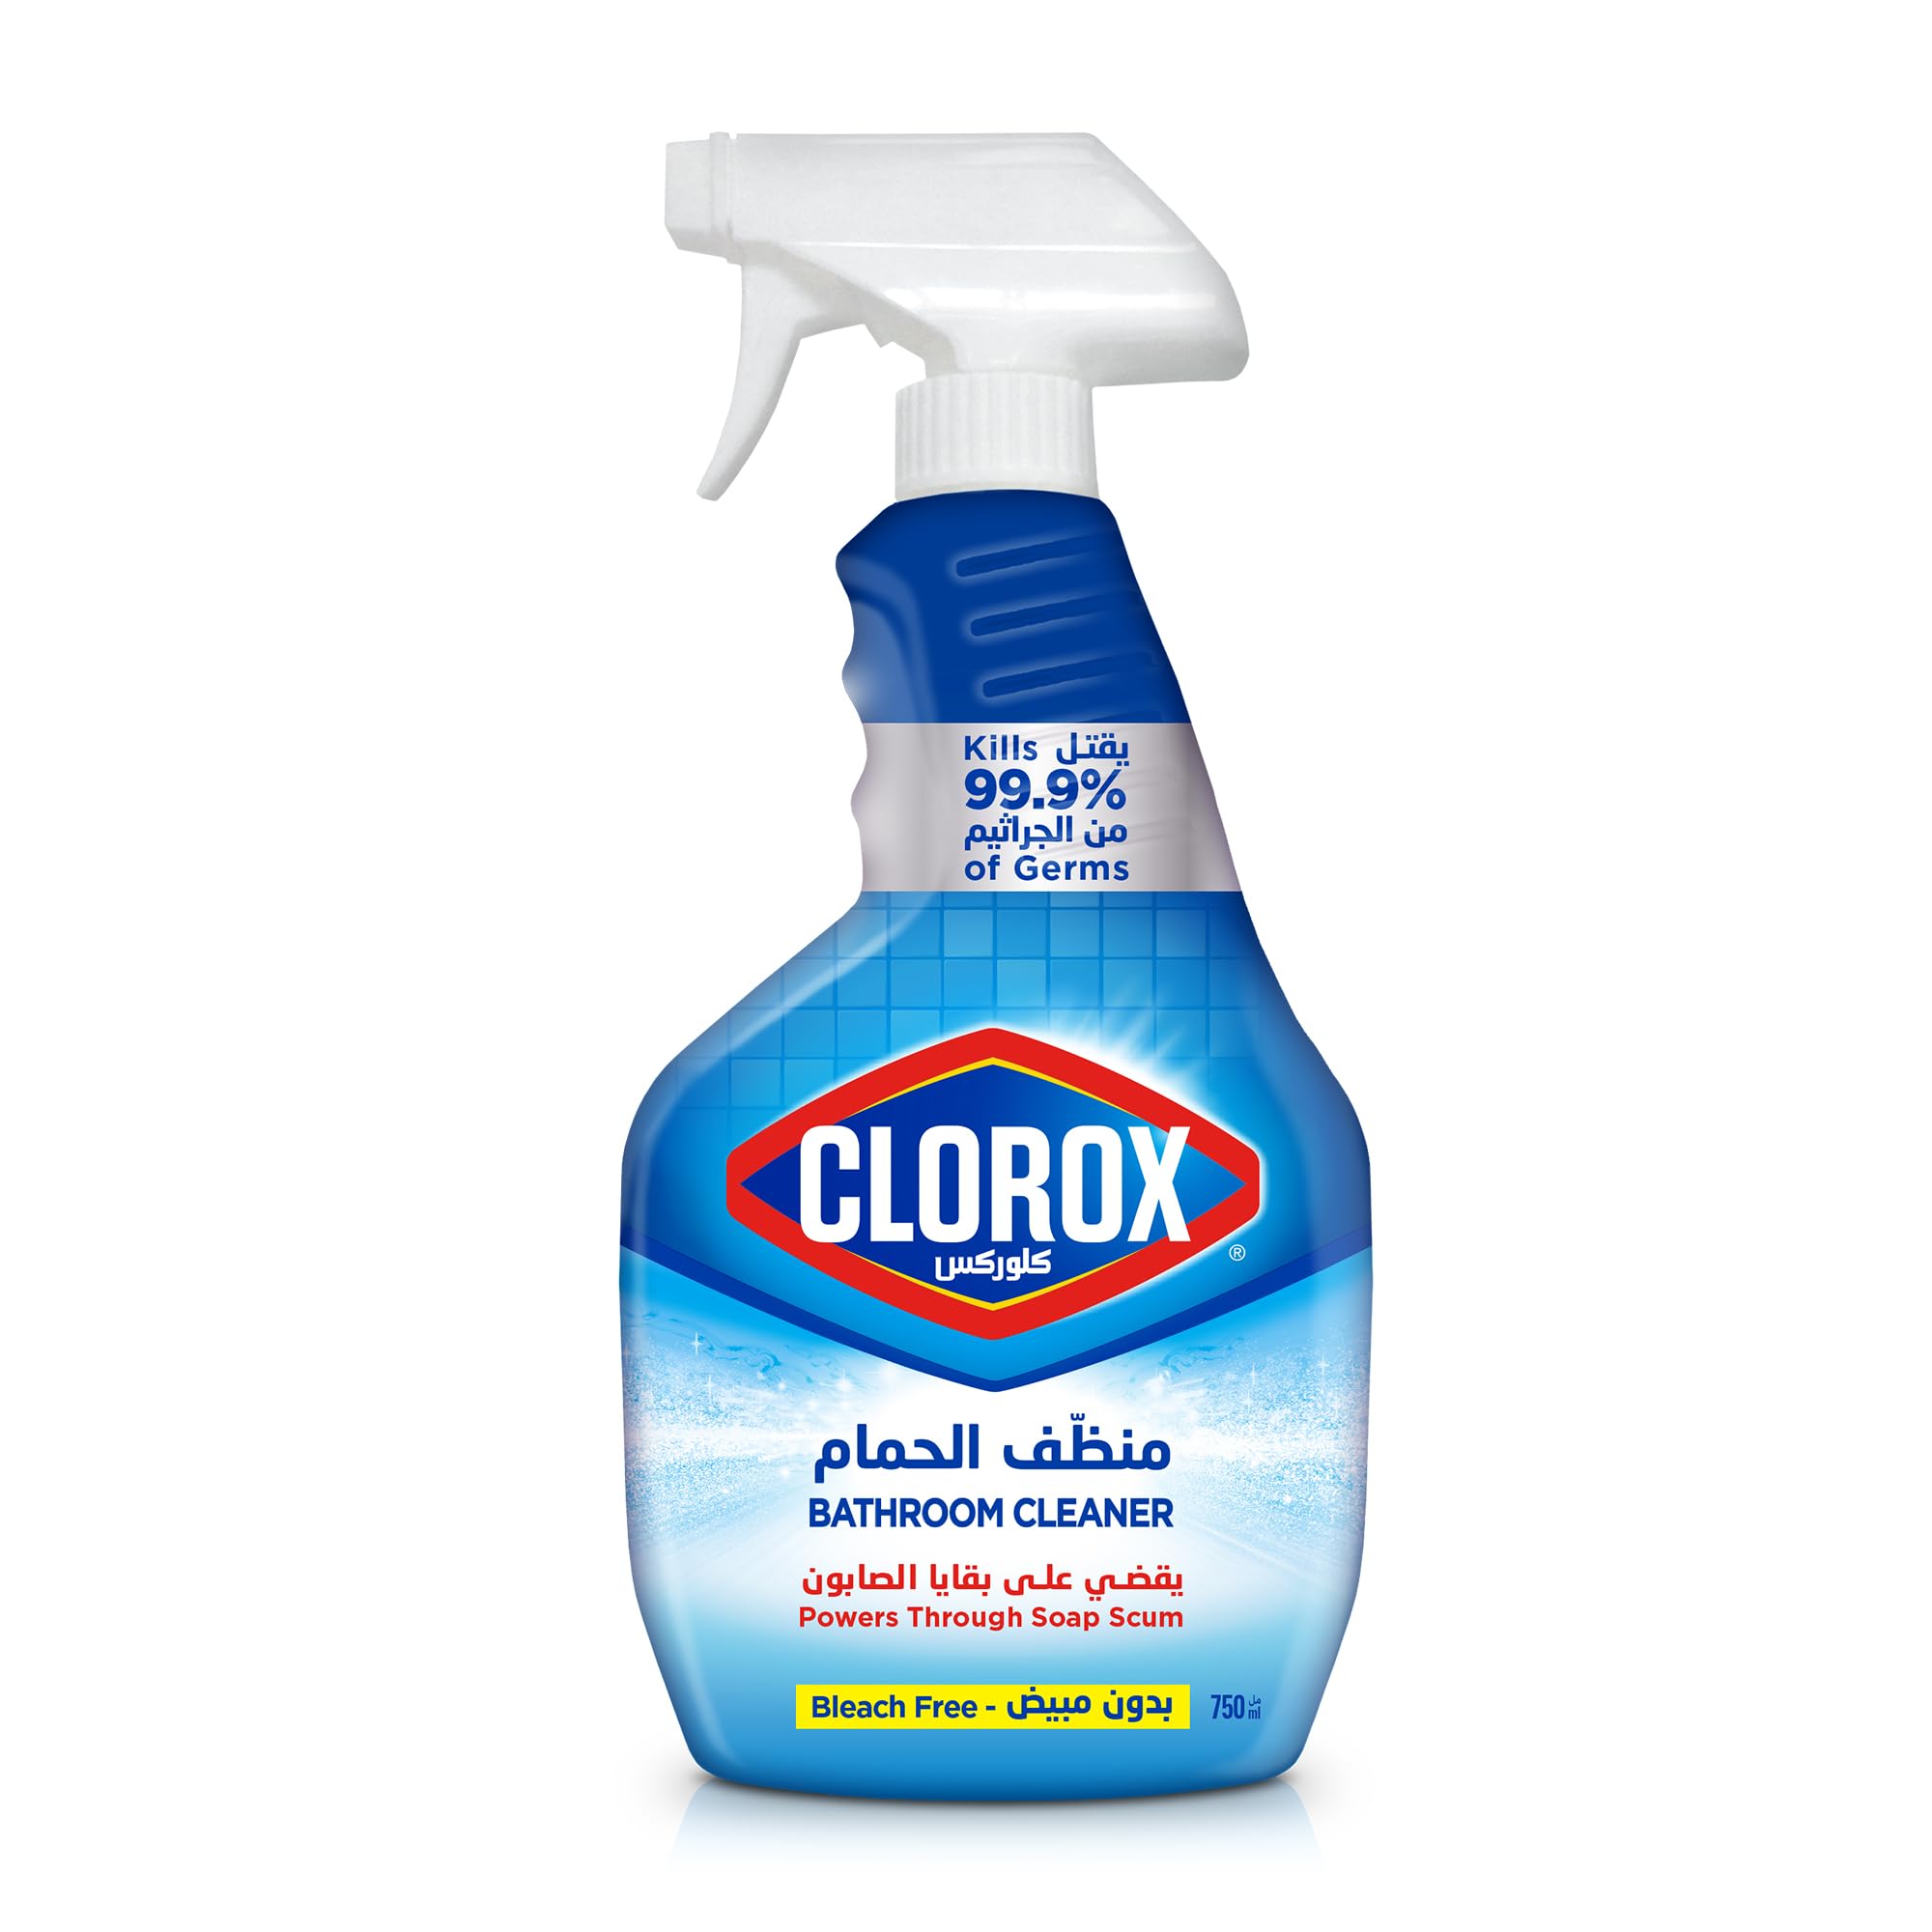 Clorox Bathroom Cleaner Spray, Kills 99.9% of Germs, 750ml